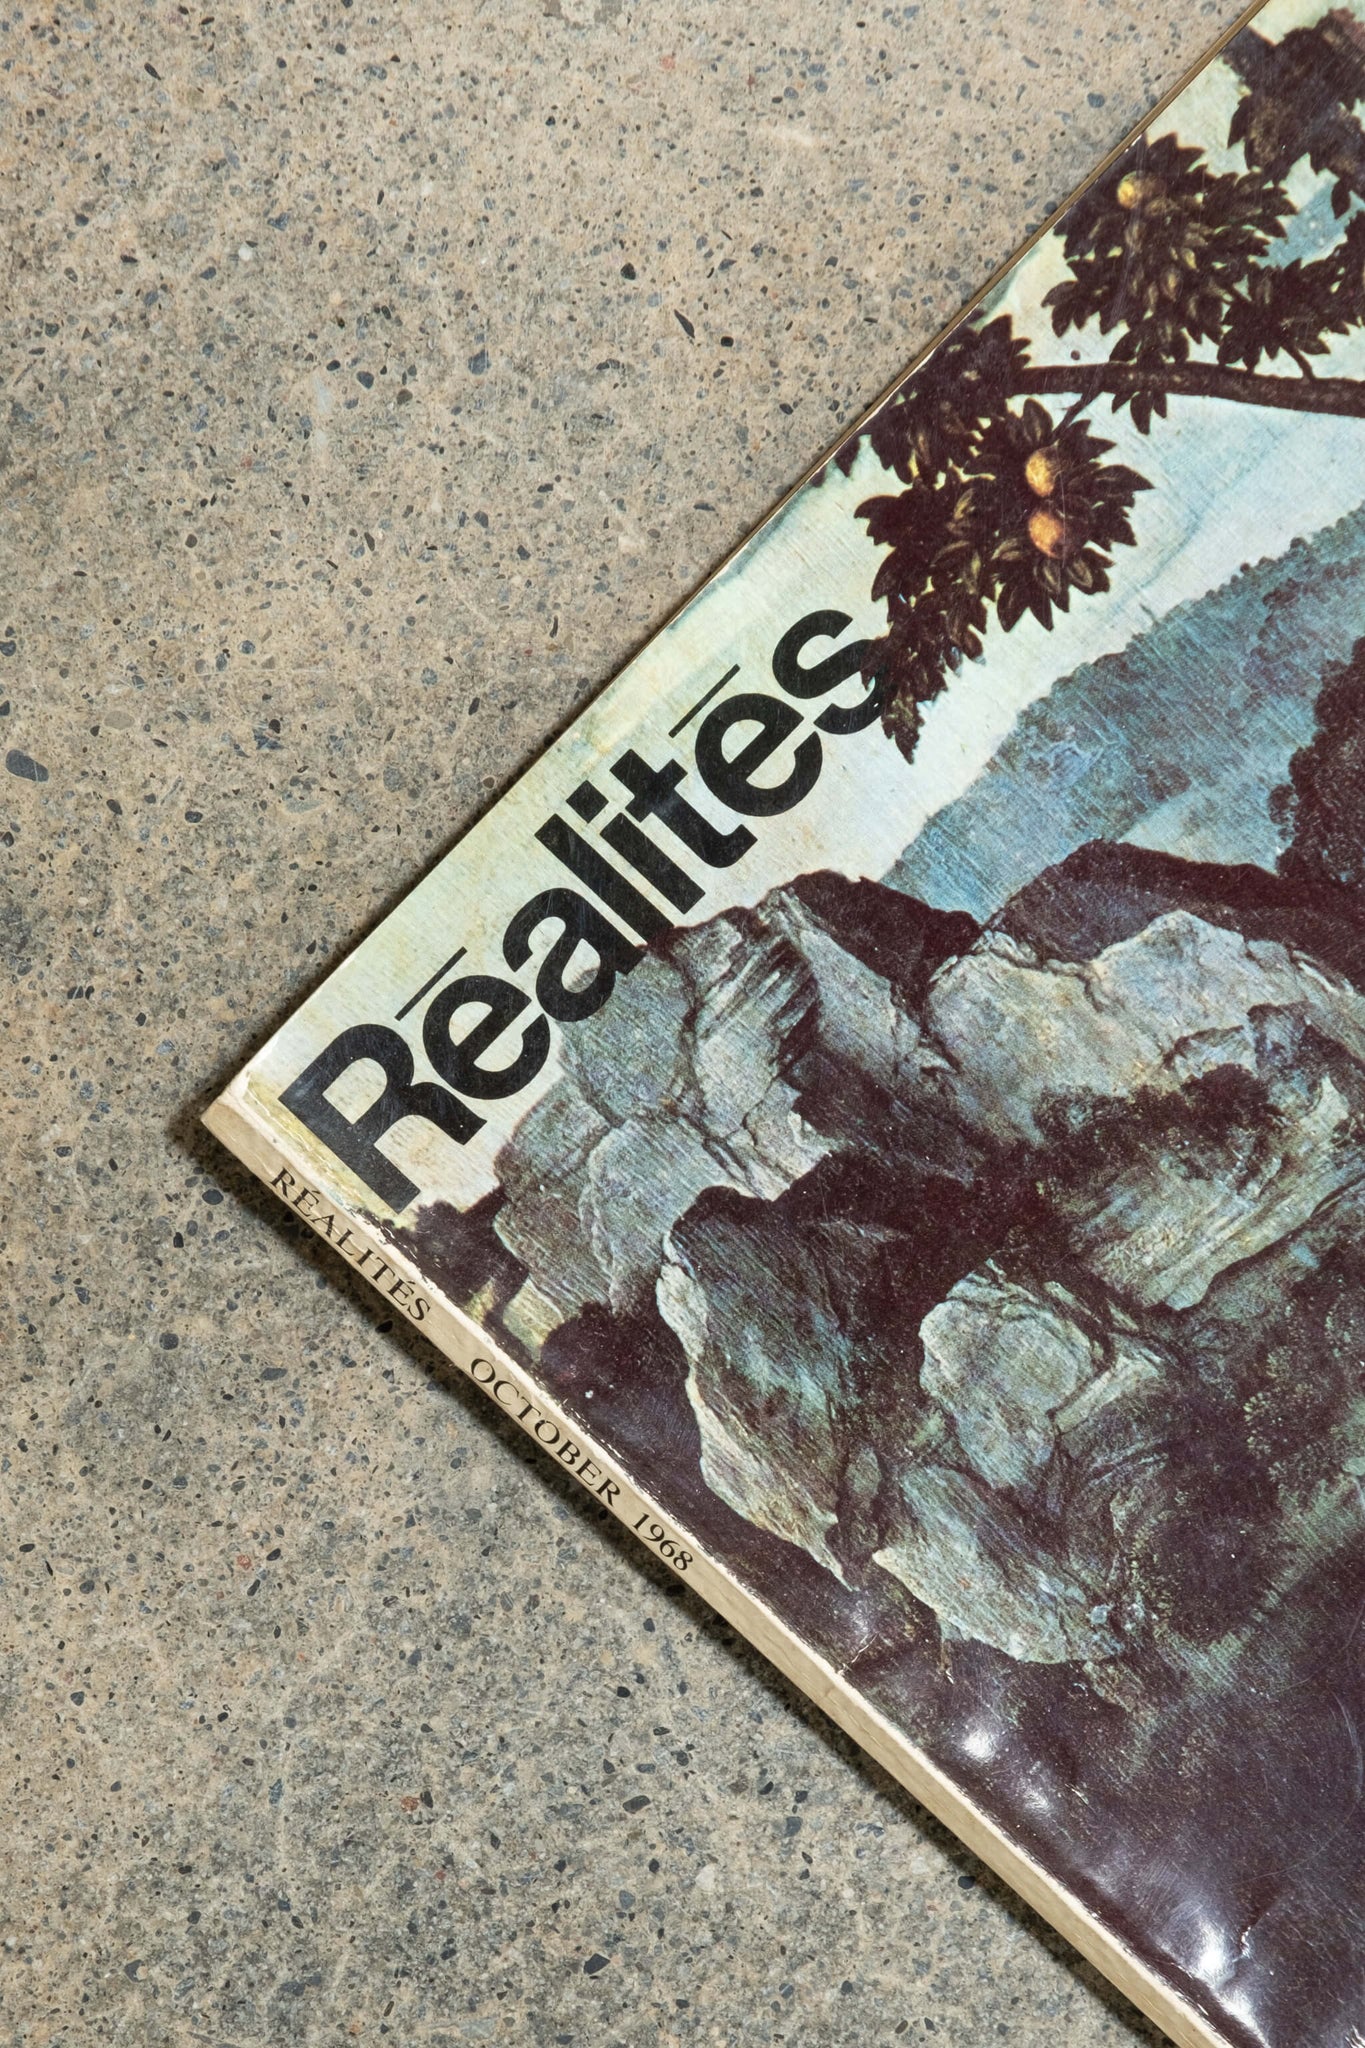 Realites Magazine - October 1968, close up